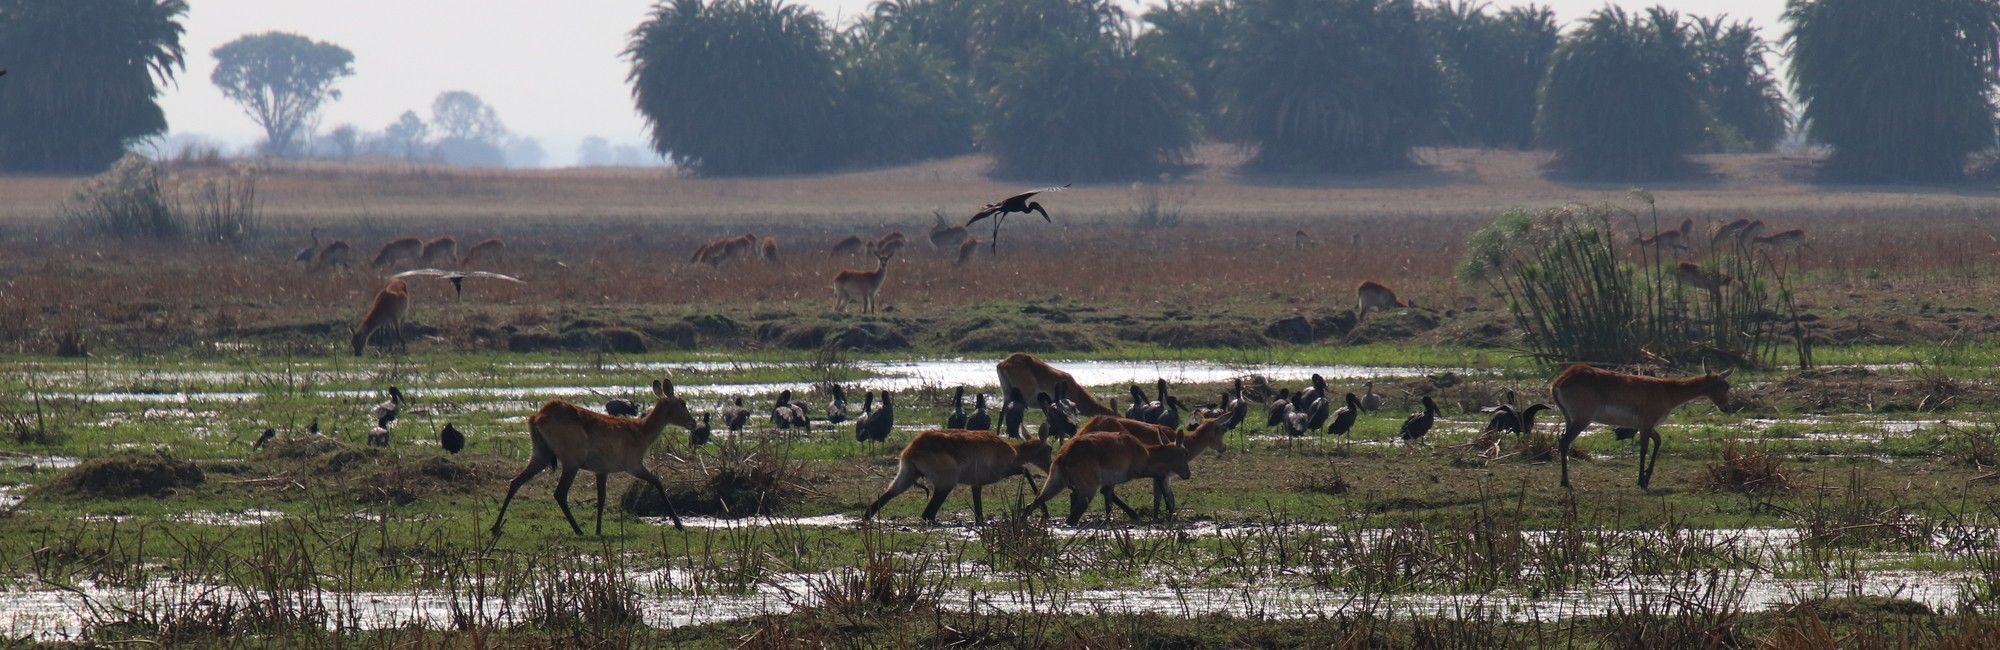 Safari Zambia Kafue National Park